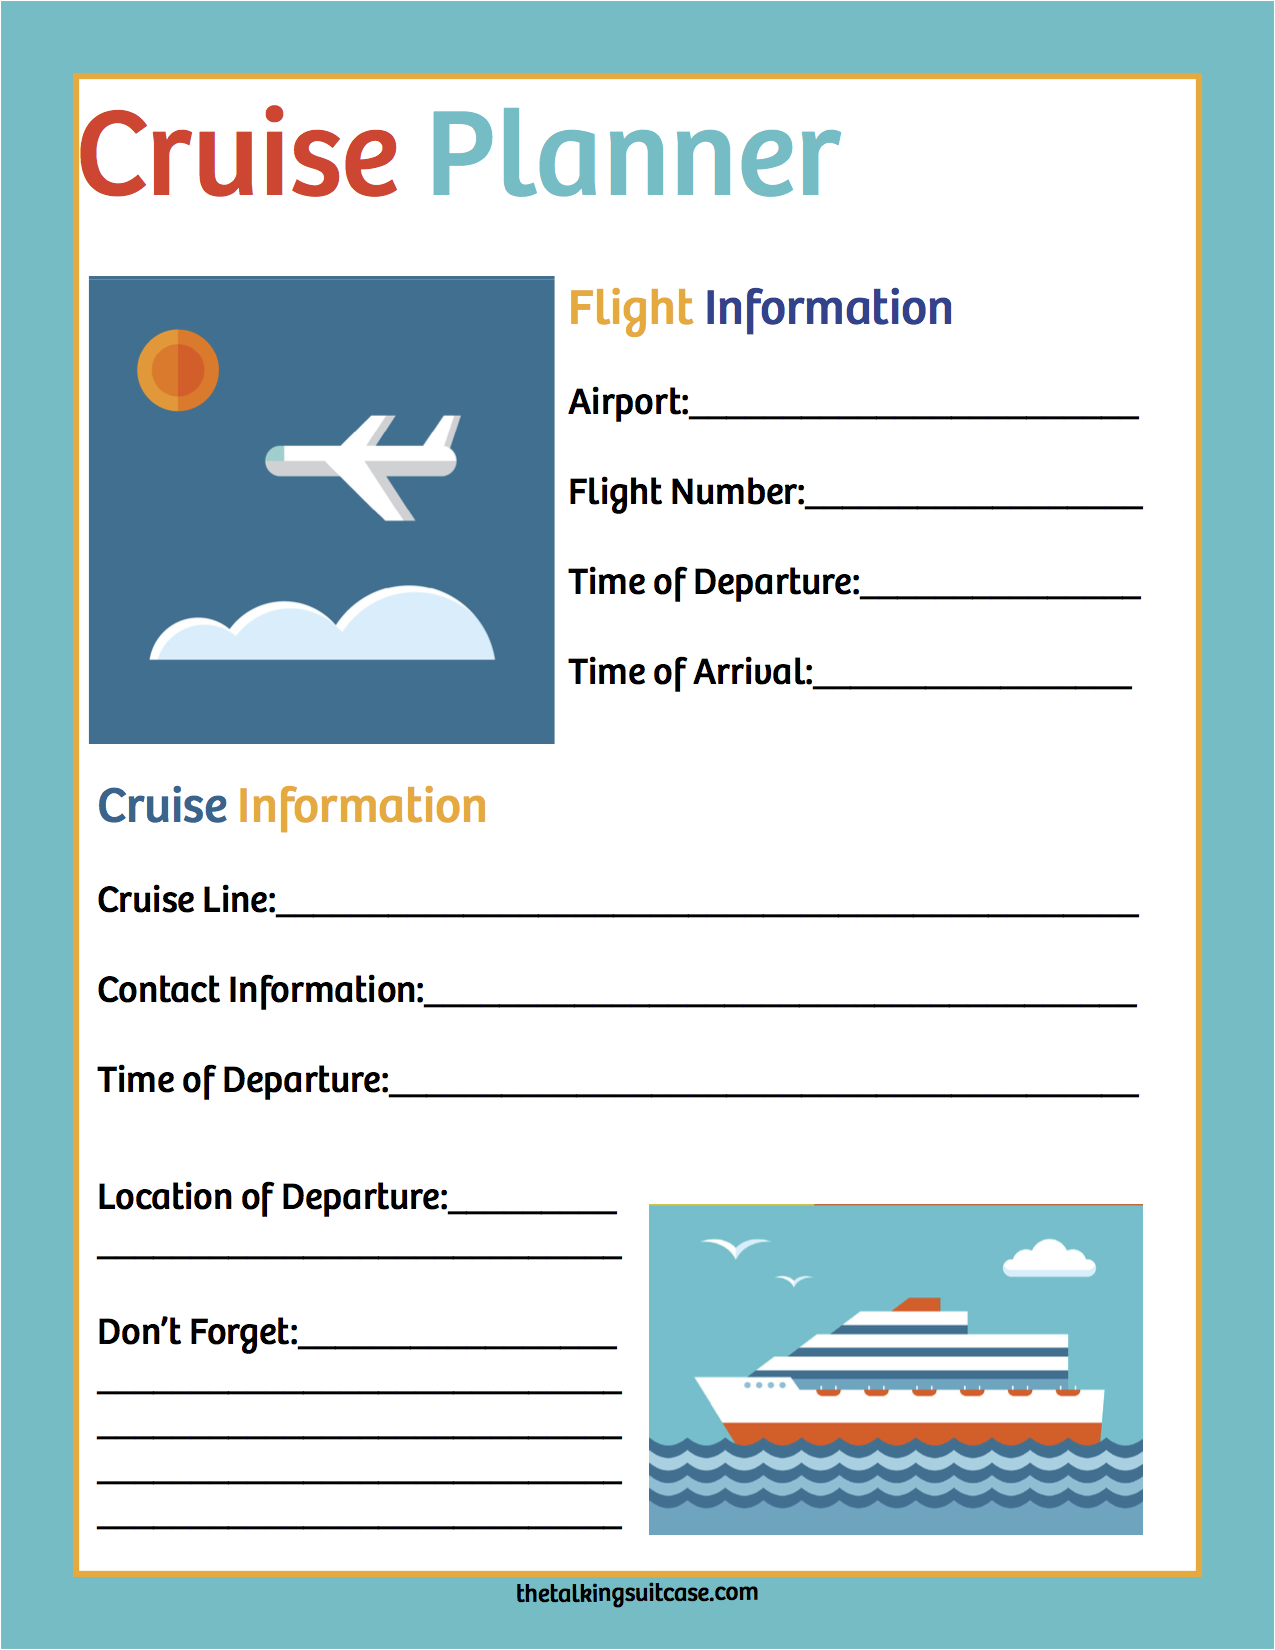 printable-cruise-planner